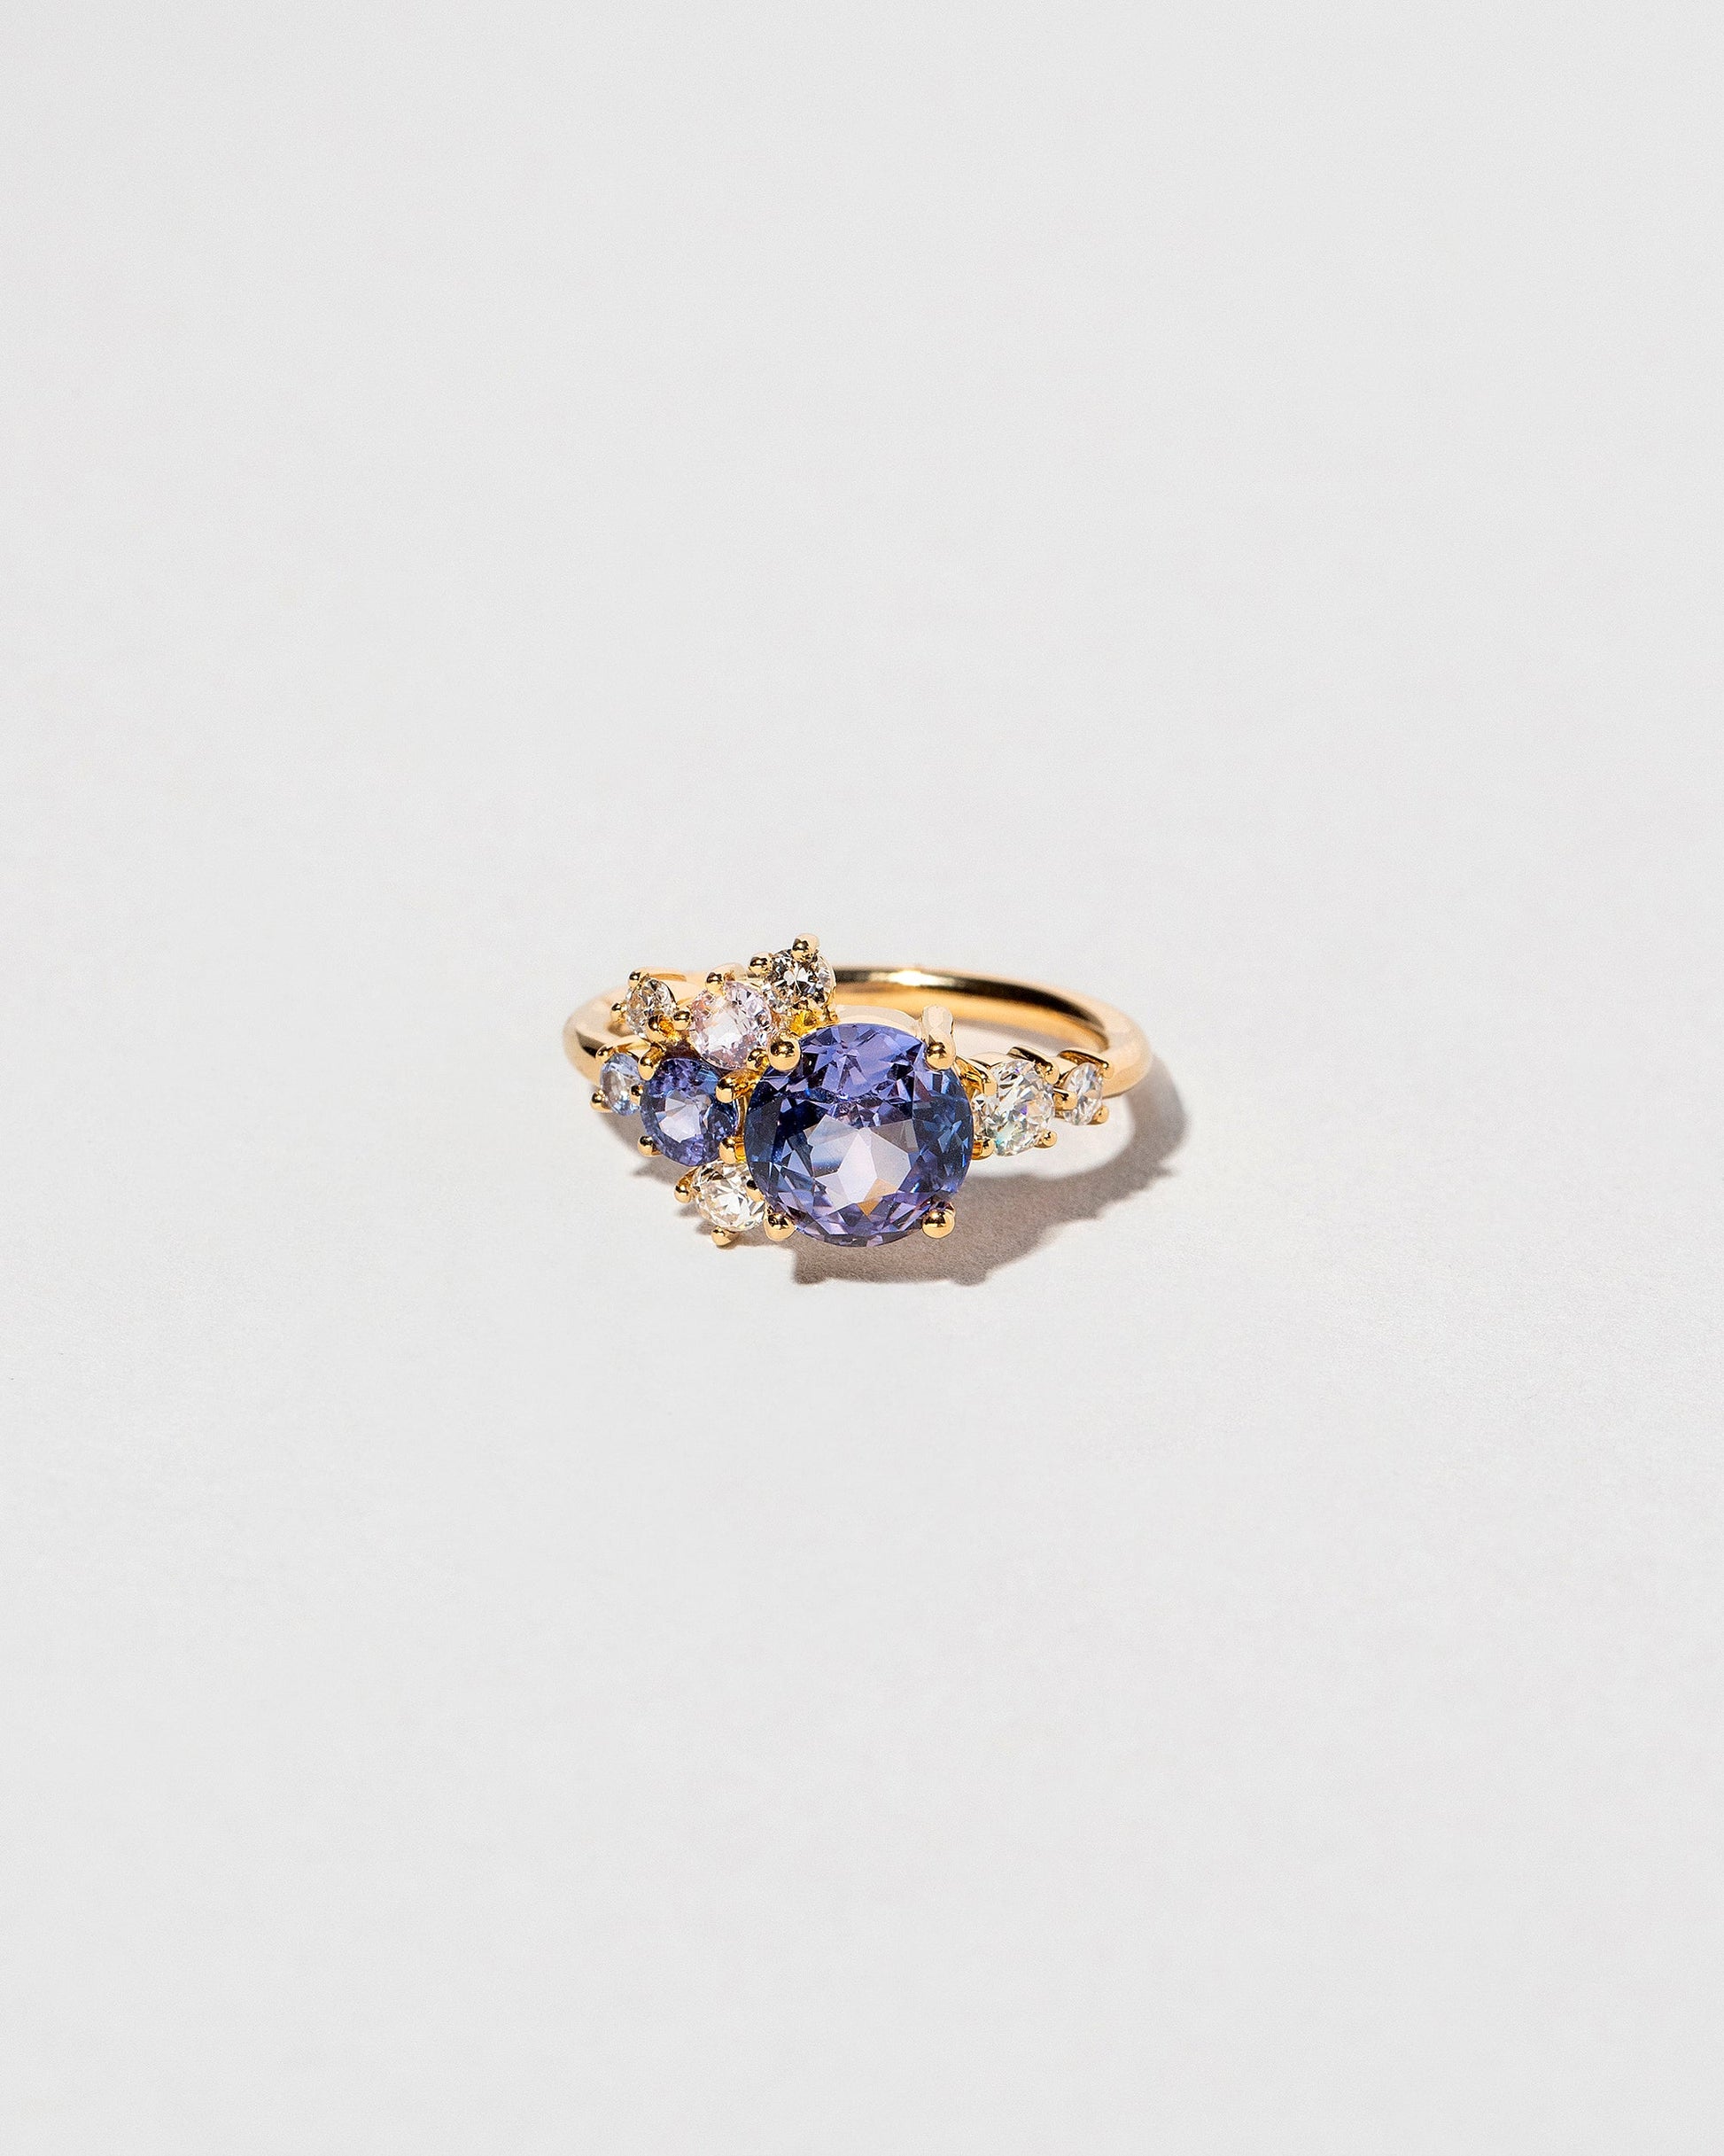  Vega Ring - Bicolor Sapphire on light color background.